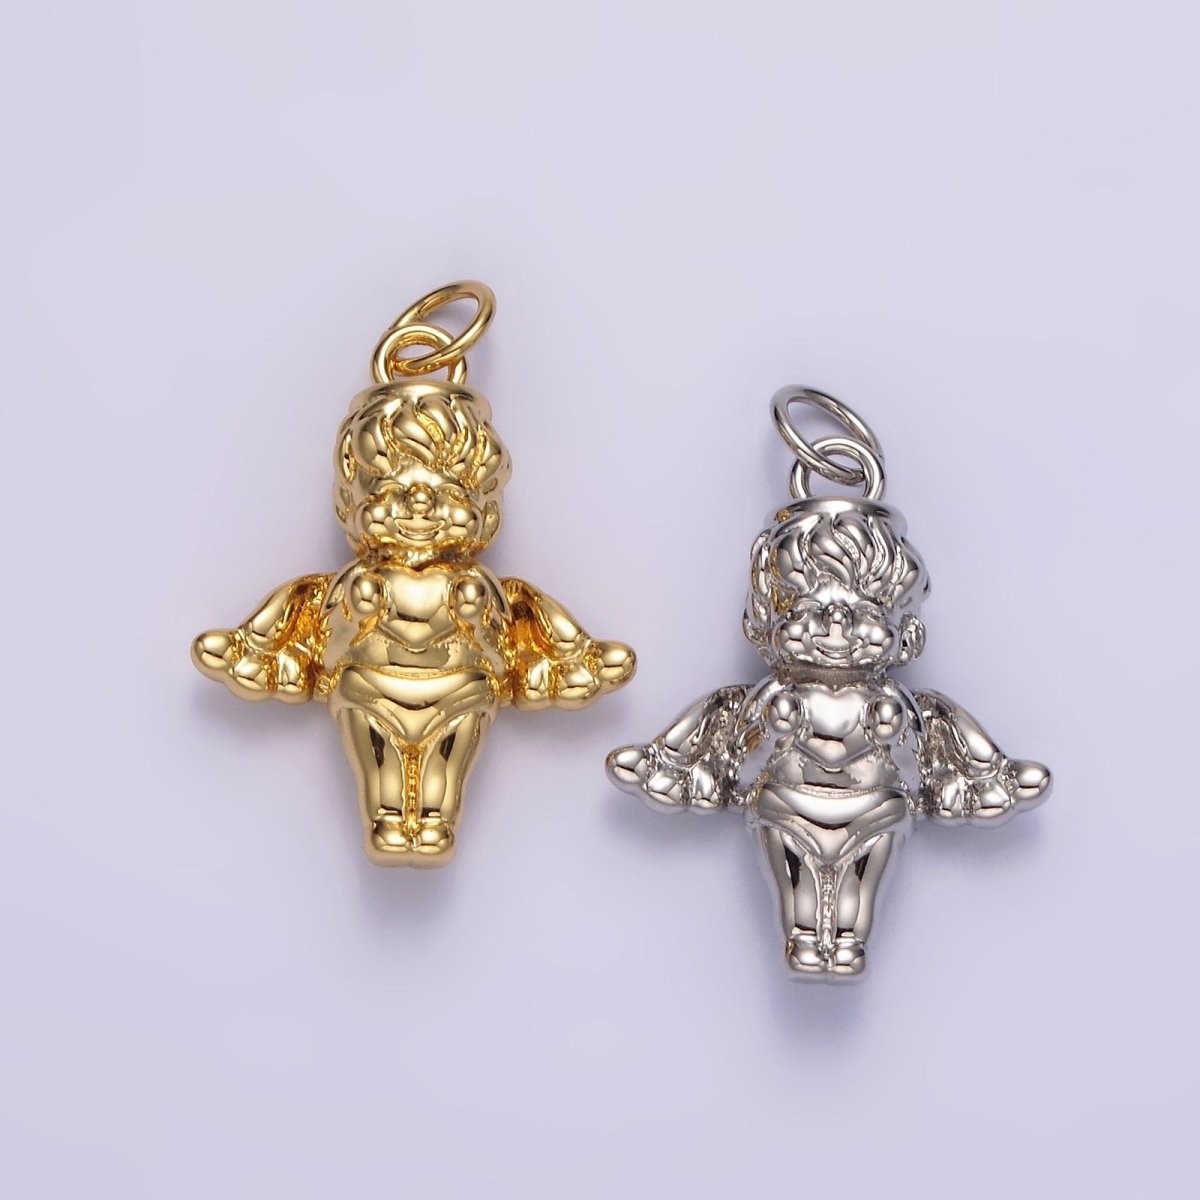 14K Gold Filled 16.5mm Standing Cherub Baby Angel Puffed Charm in Silver & Gold | N1511 N1512 - DLUXCA